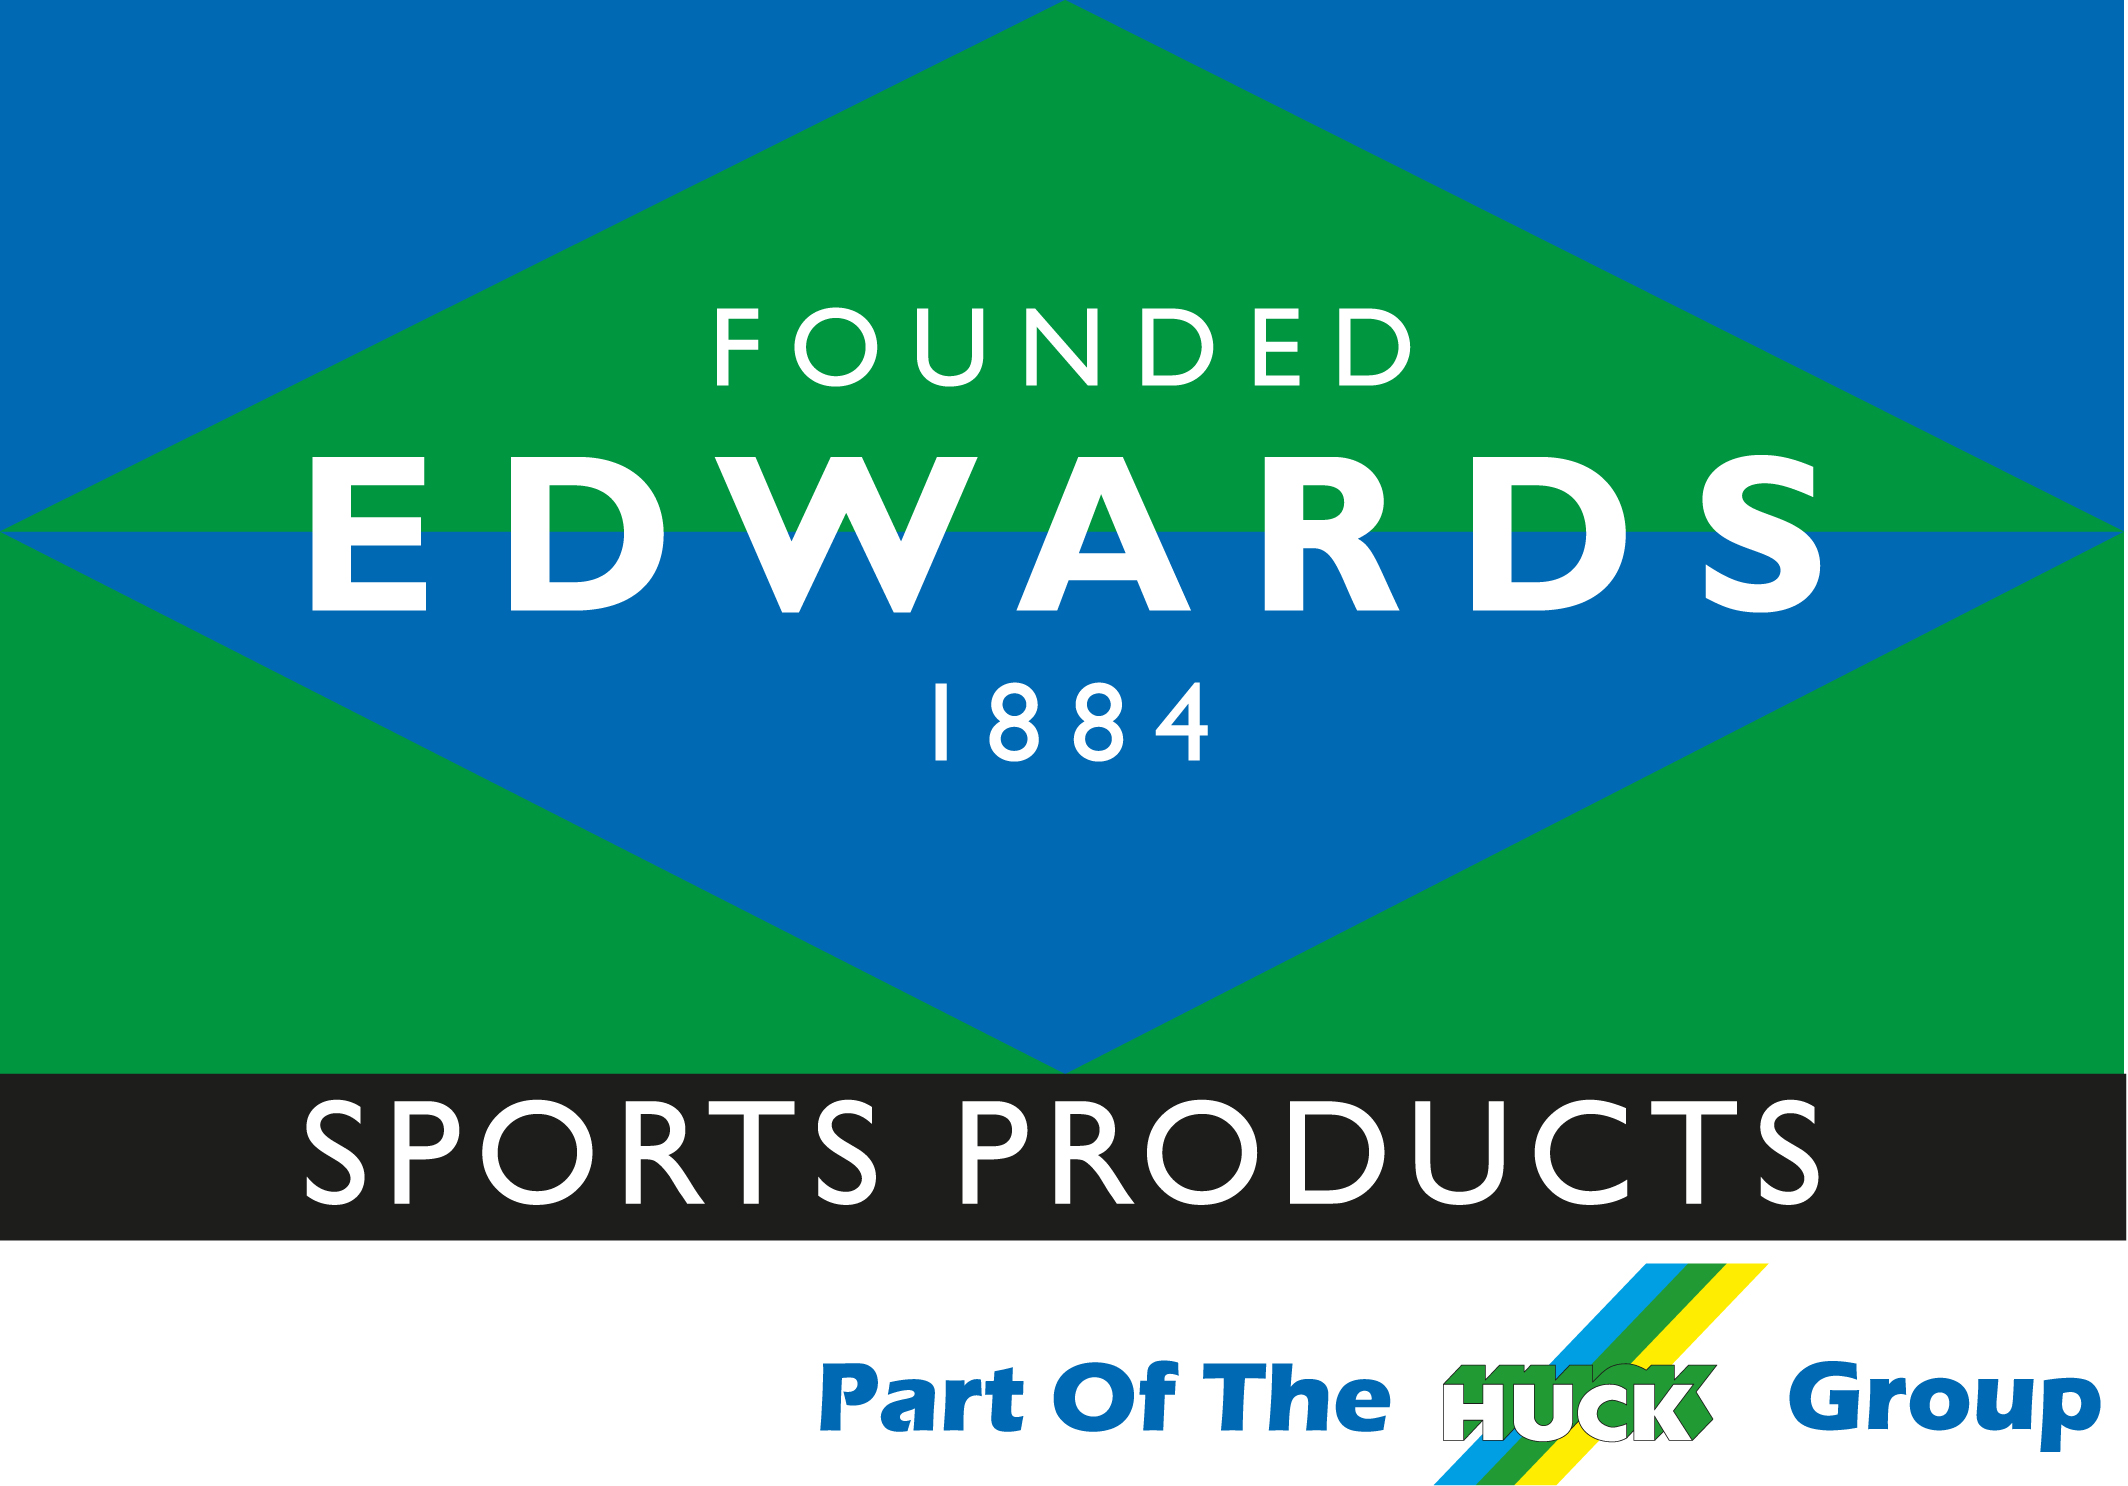 Edward's sports the world finest tennis nets